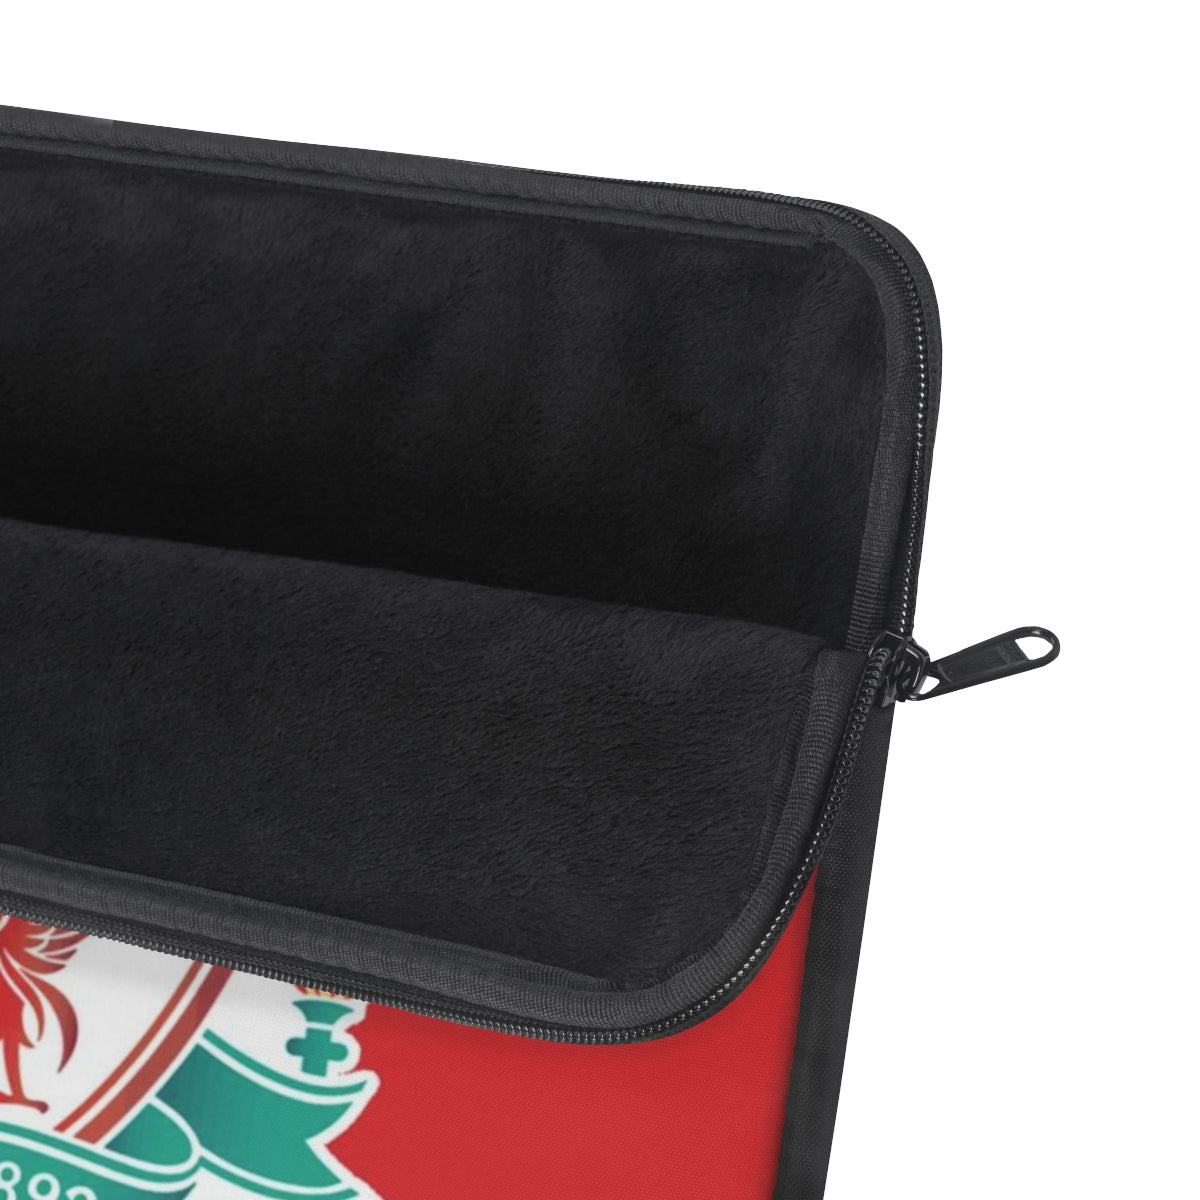 Liverpool F.C. Laptop Sleeve